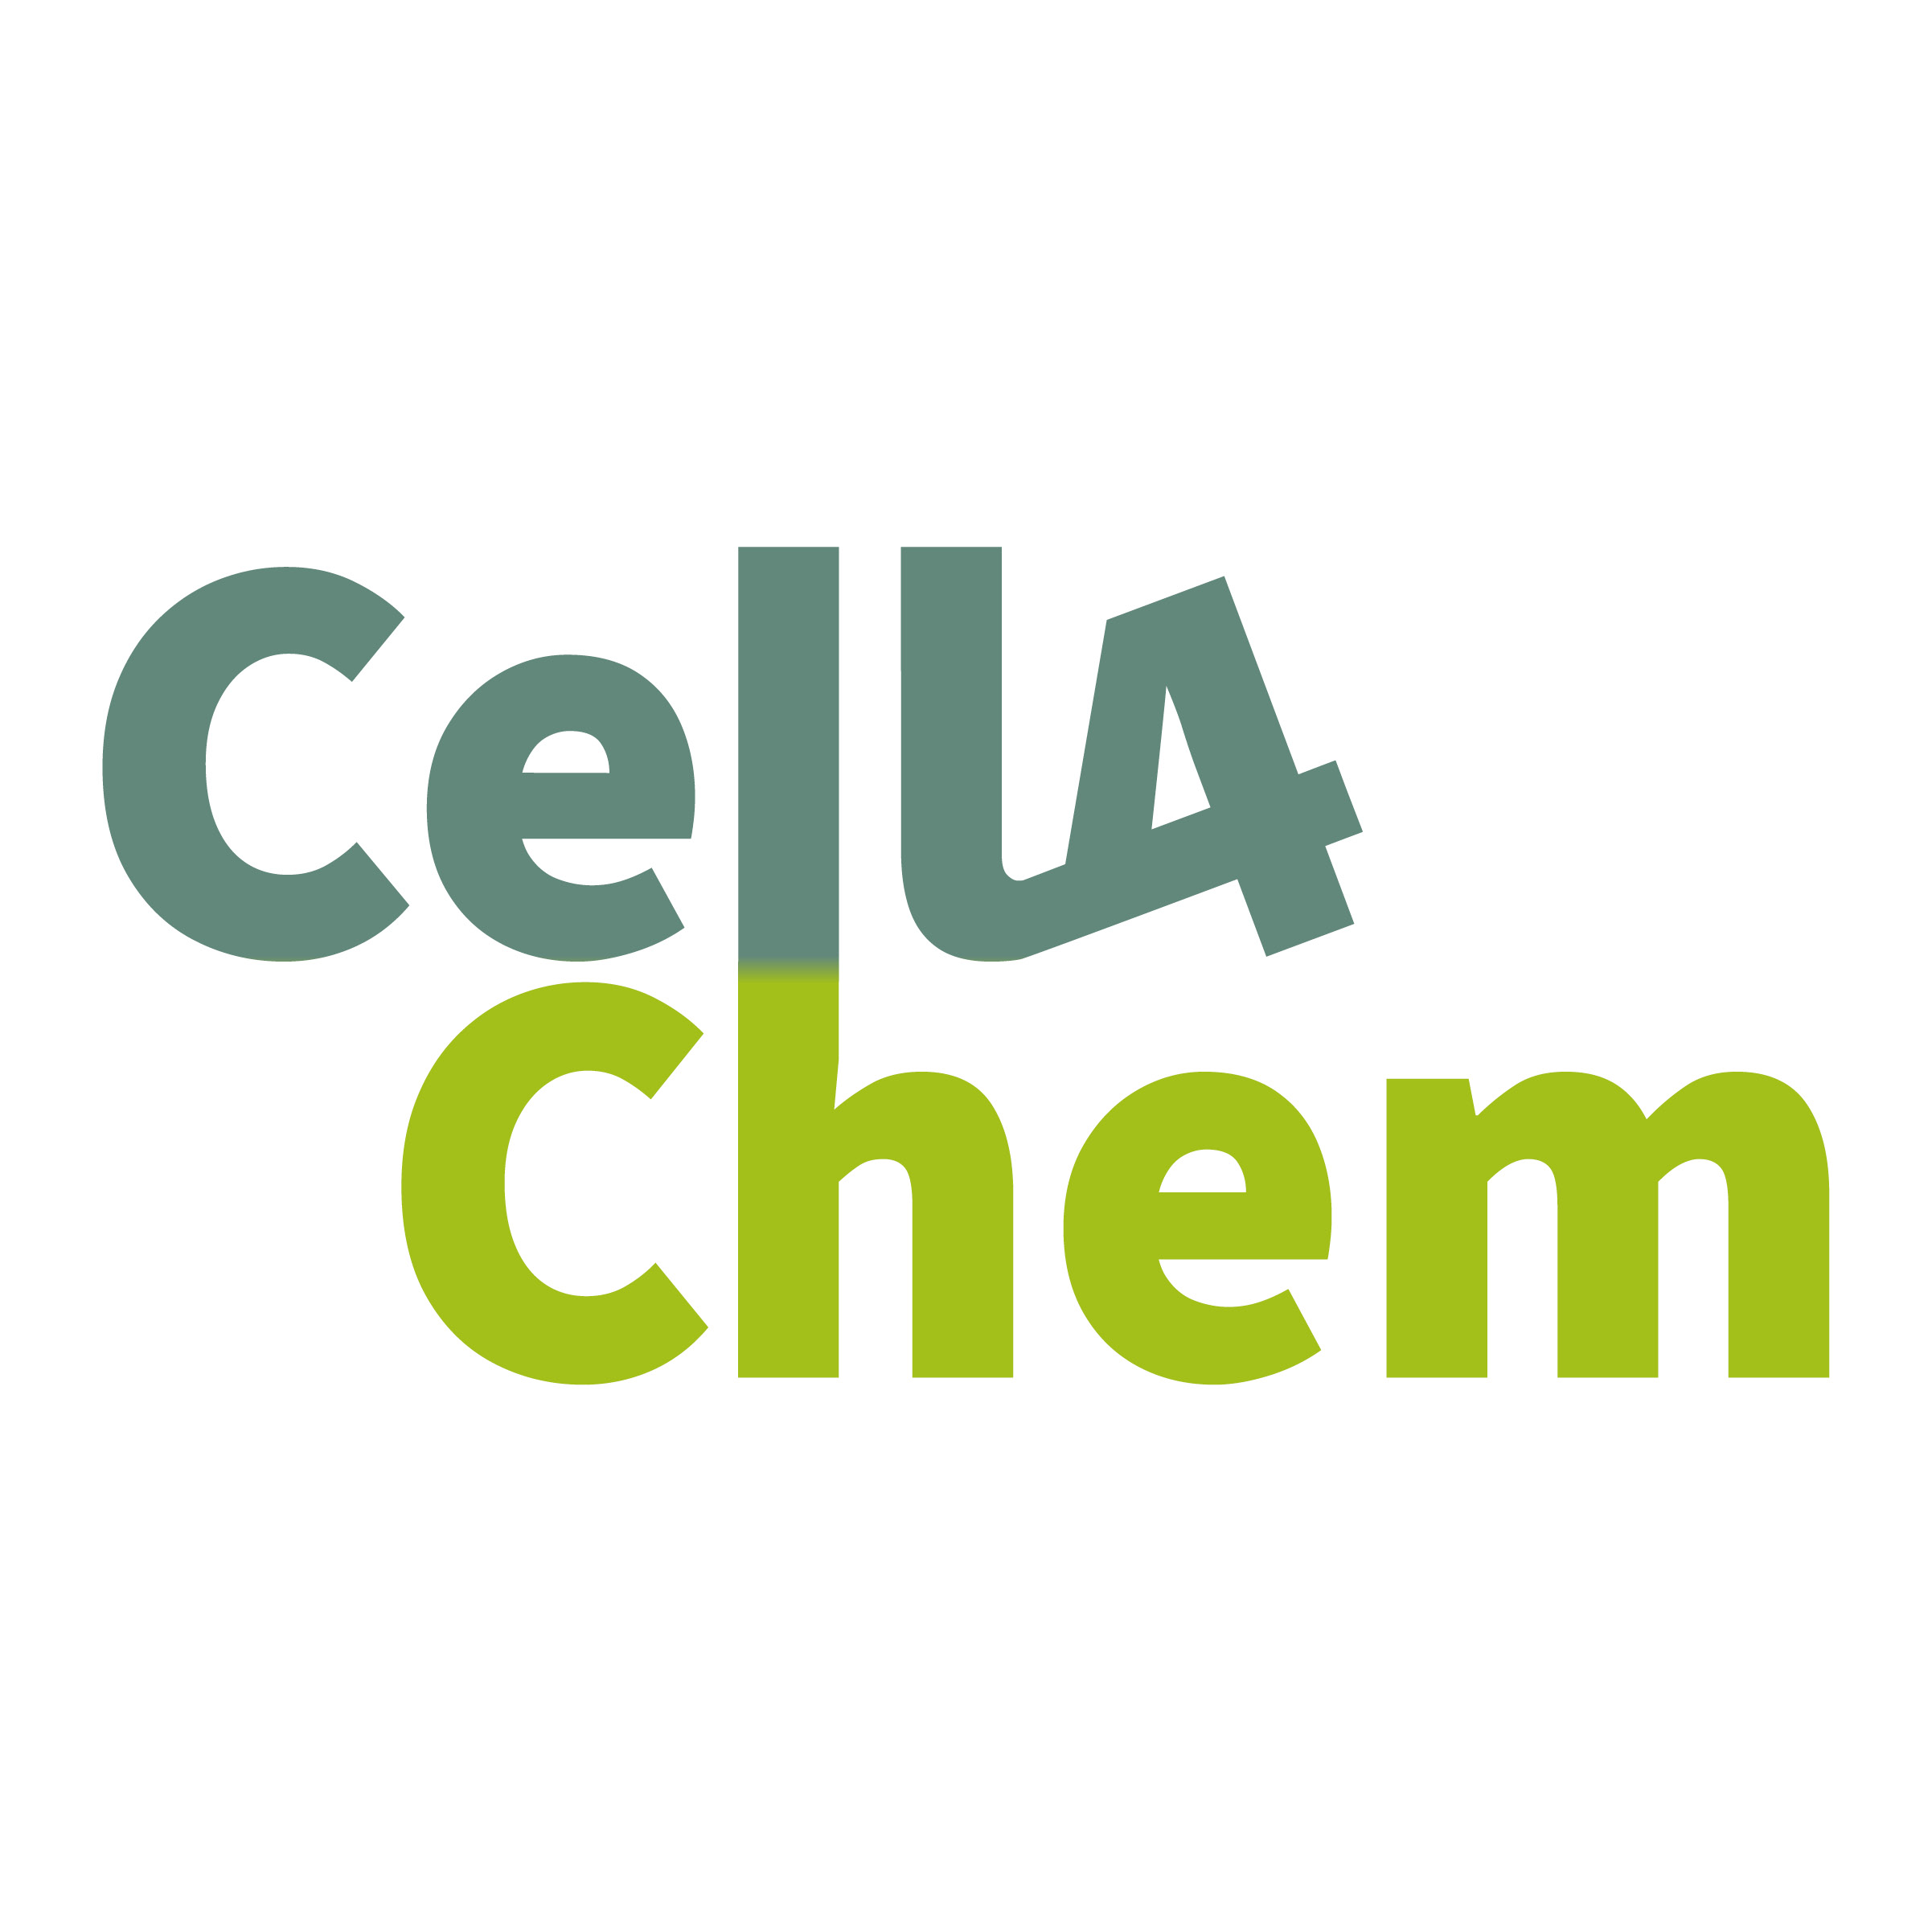 Logo CELL4CHEM